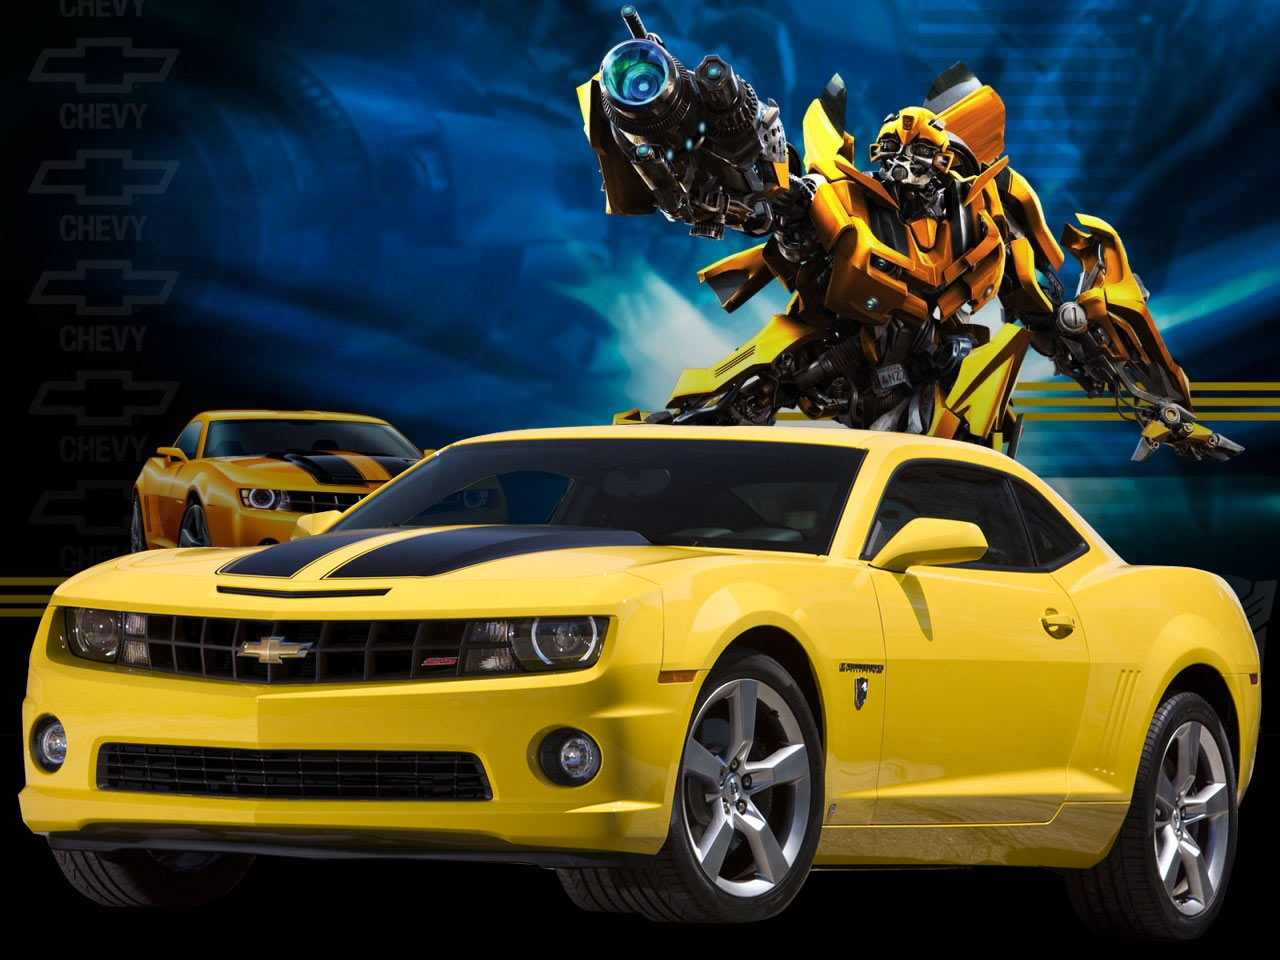 Bumblebee - The Transformers Wallpaper (36901555) - Fanpop